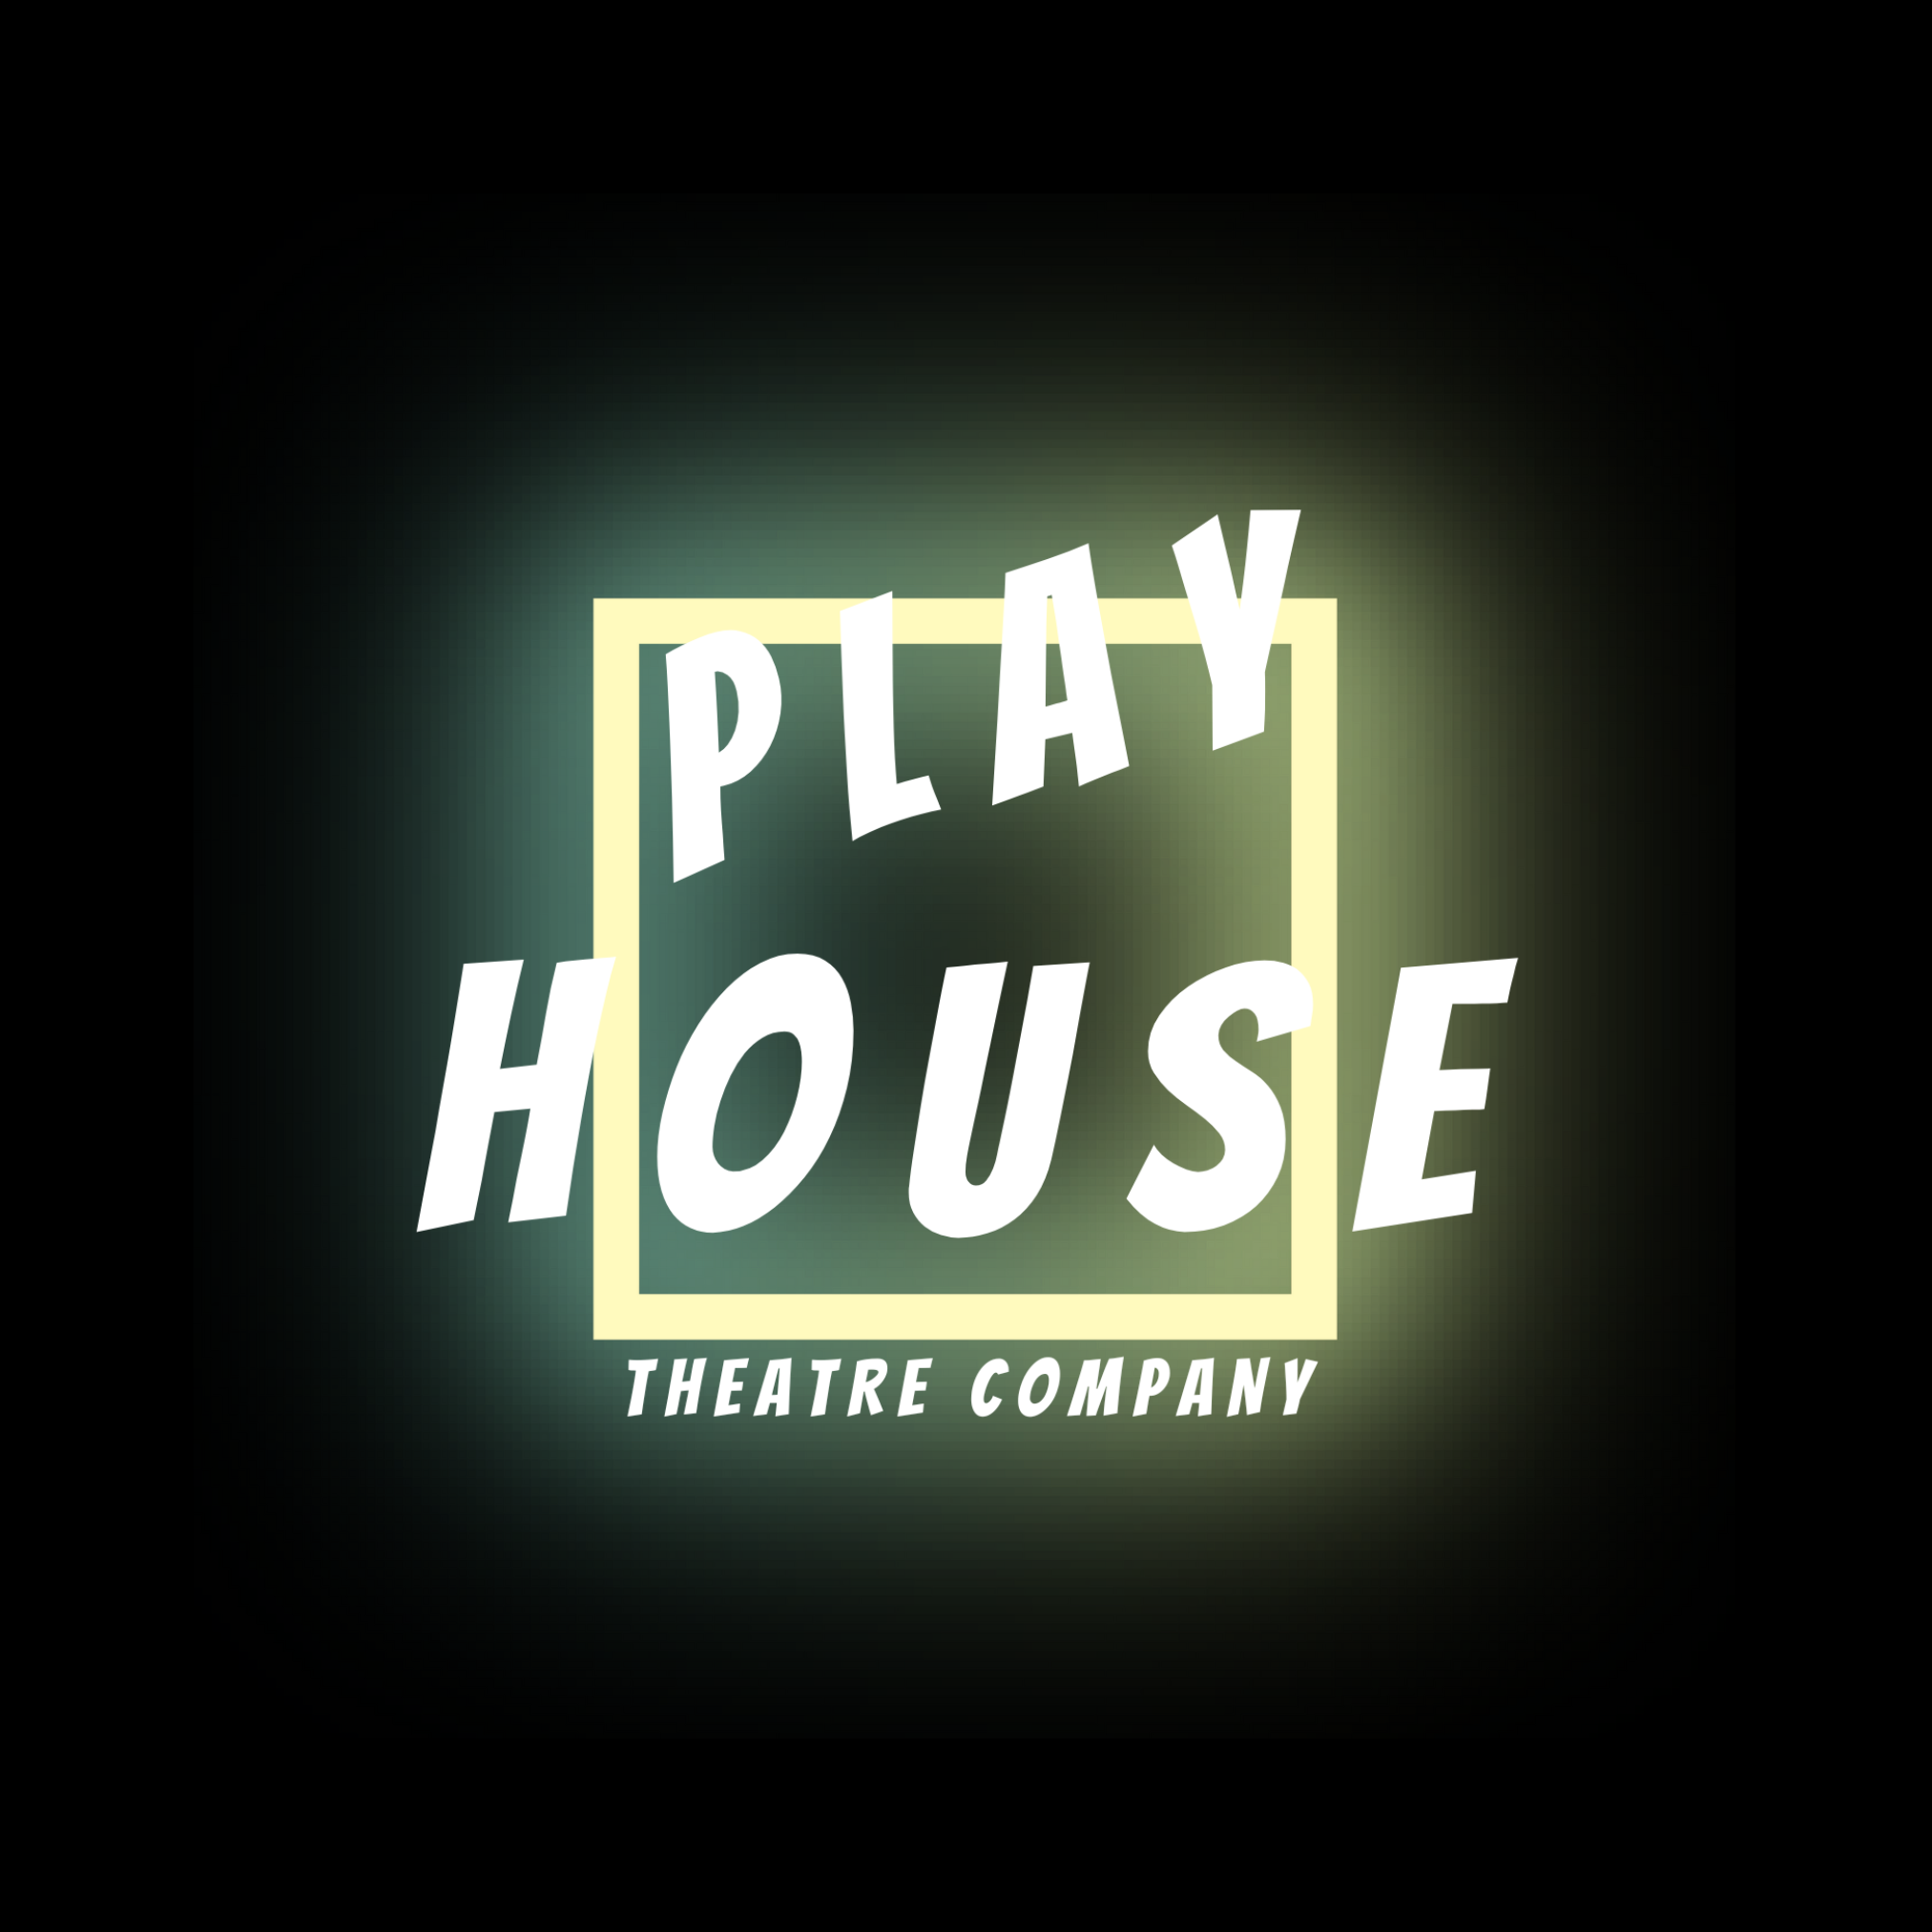 Playhouse Theatre Company logo